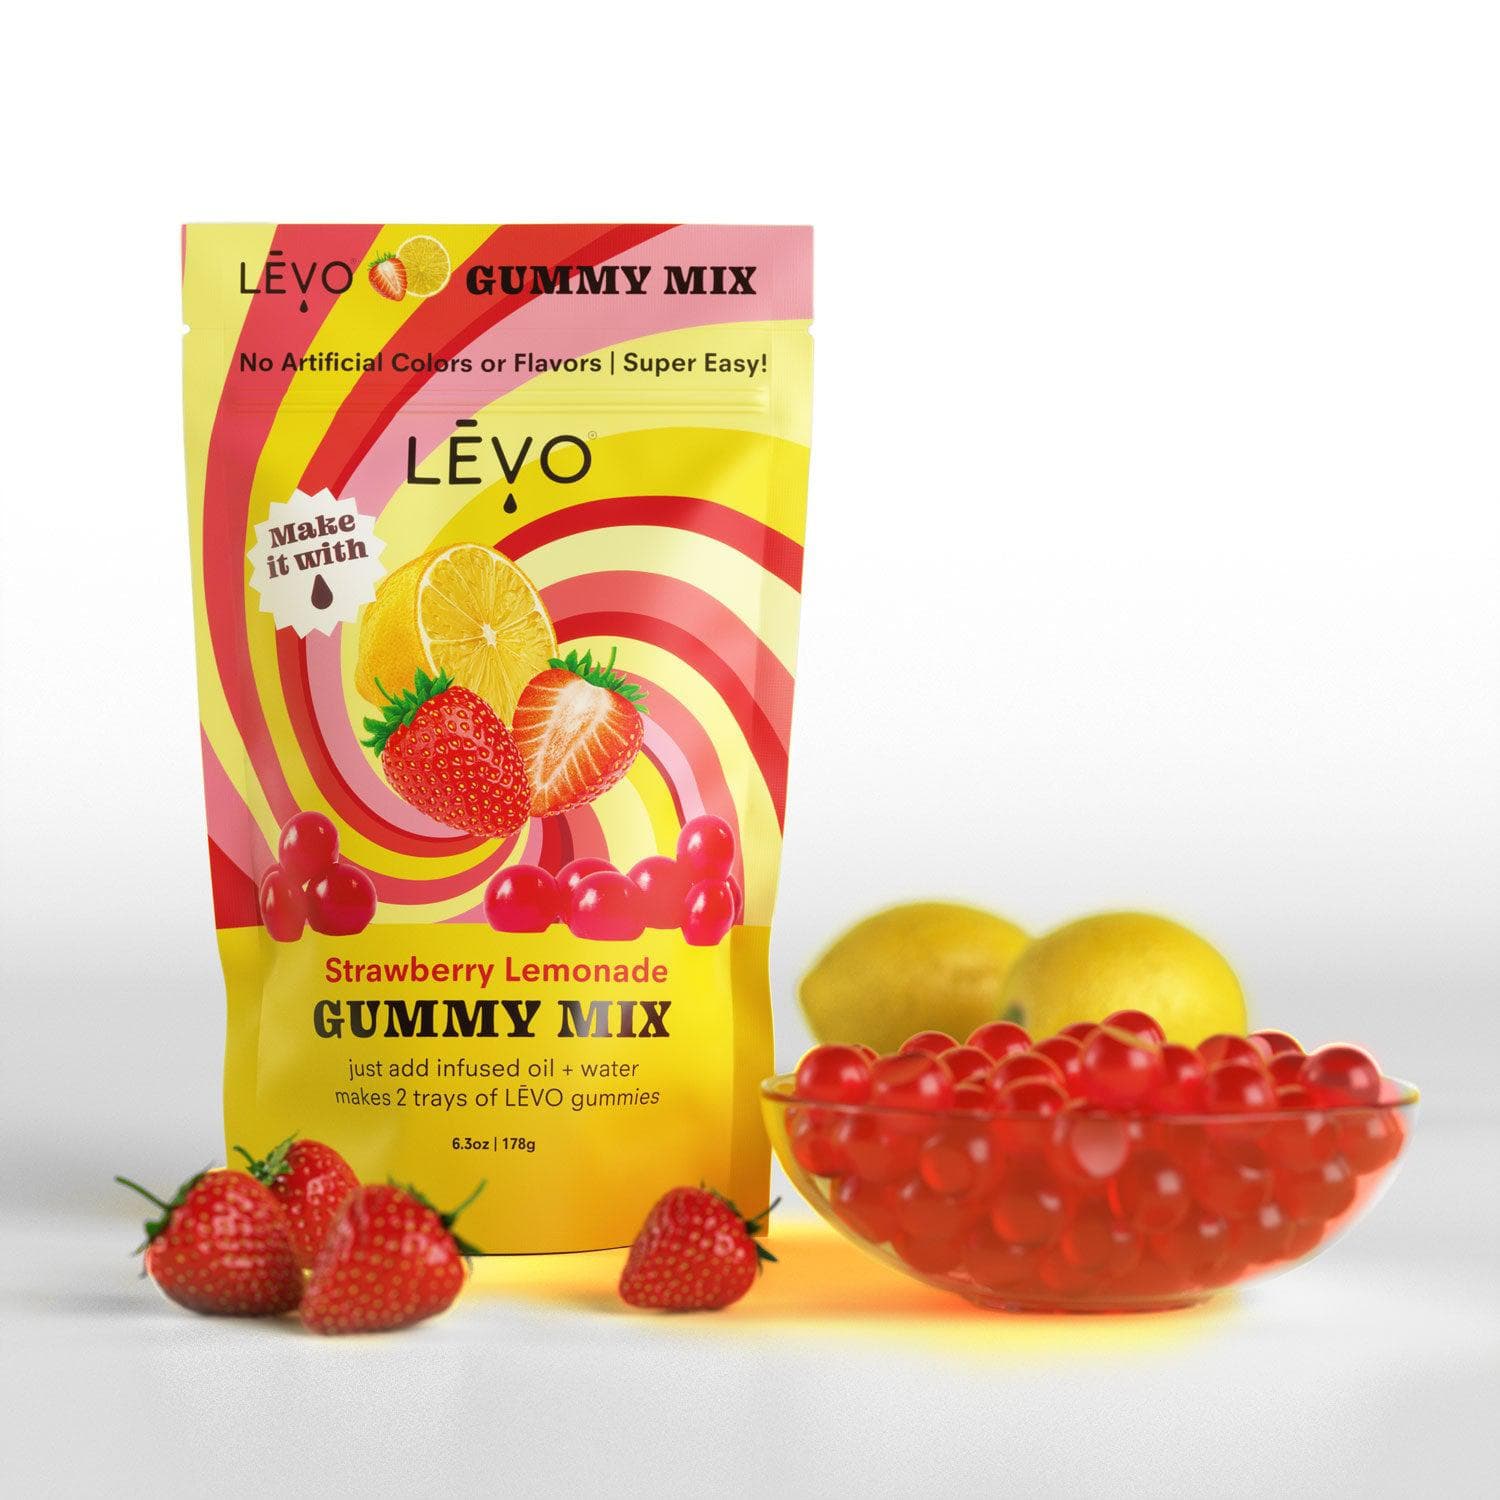 LEVO Gummy mix in strawberry lemonade